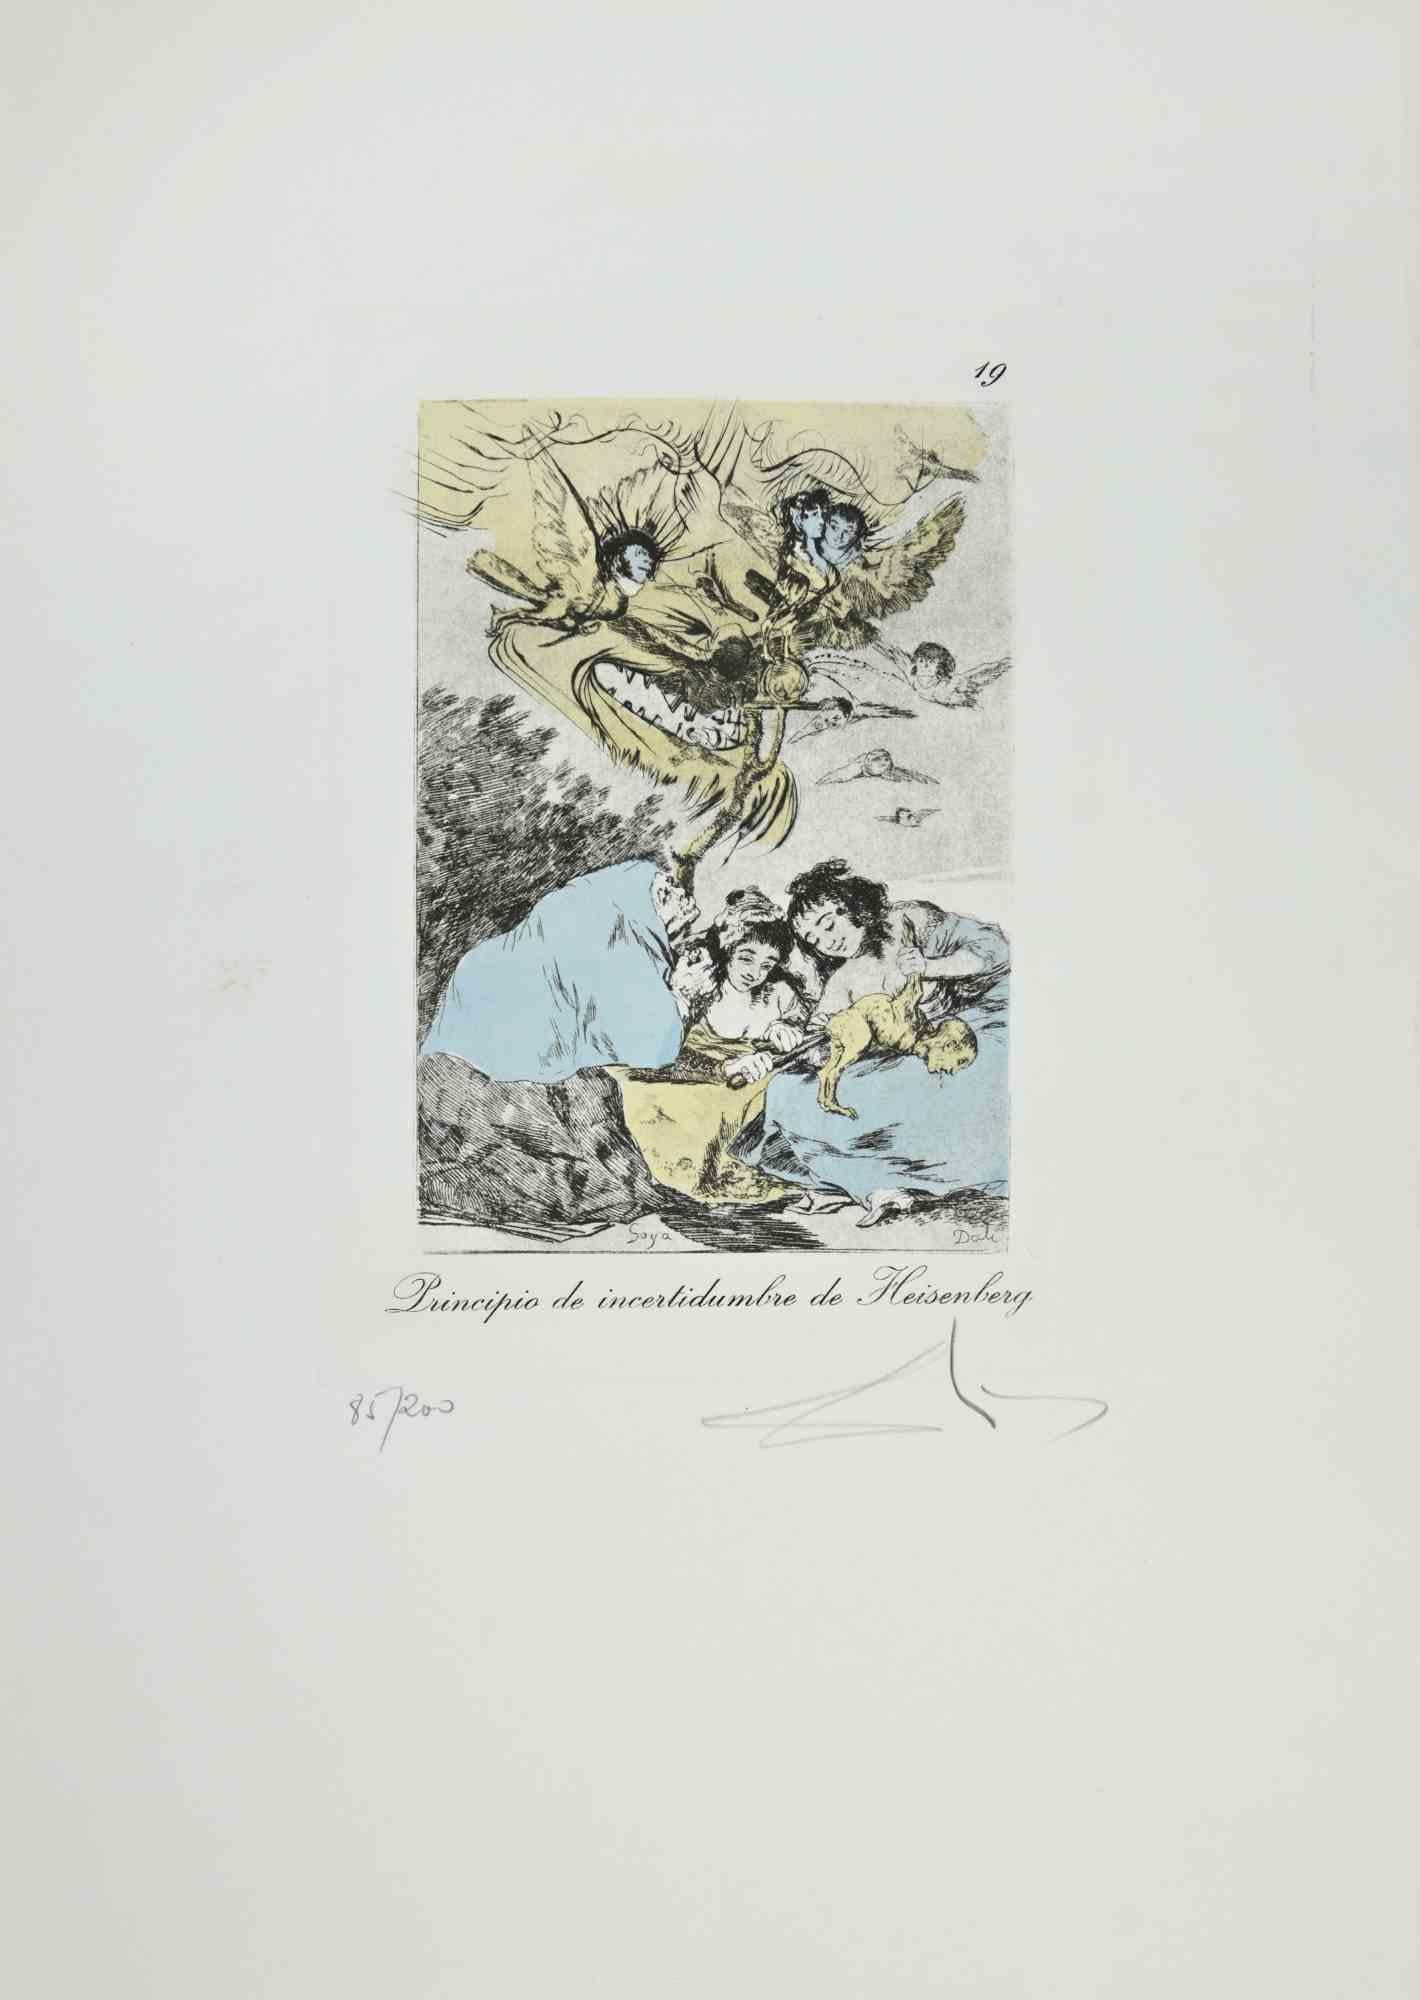 Figurative Print Salvador Dalì and Francisco Goya - Principio de Incertidumbre de Heisenberg - Gravure, pointe sèche et pochoir  - 1977